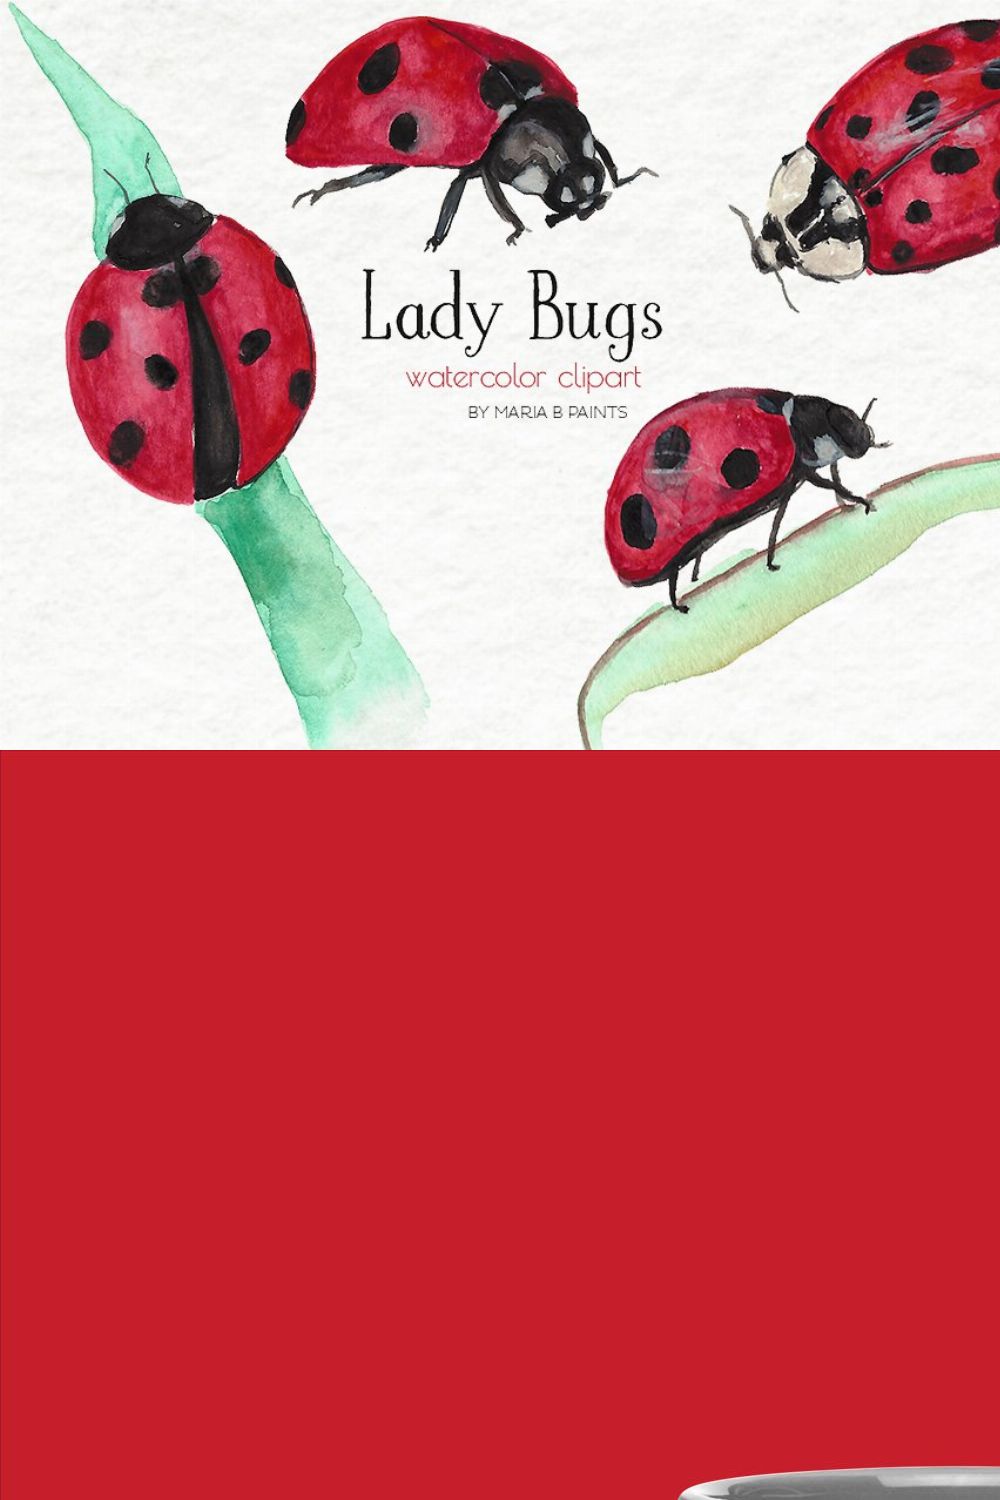 Watercolor Clip Art - Lady Bugs pinterest preview image.